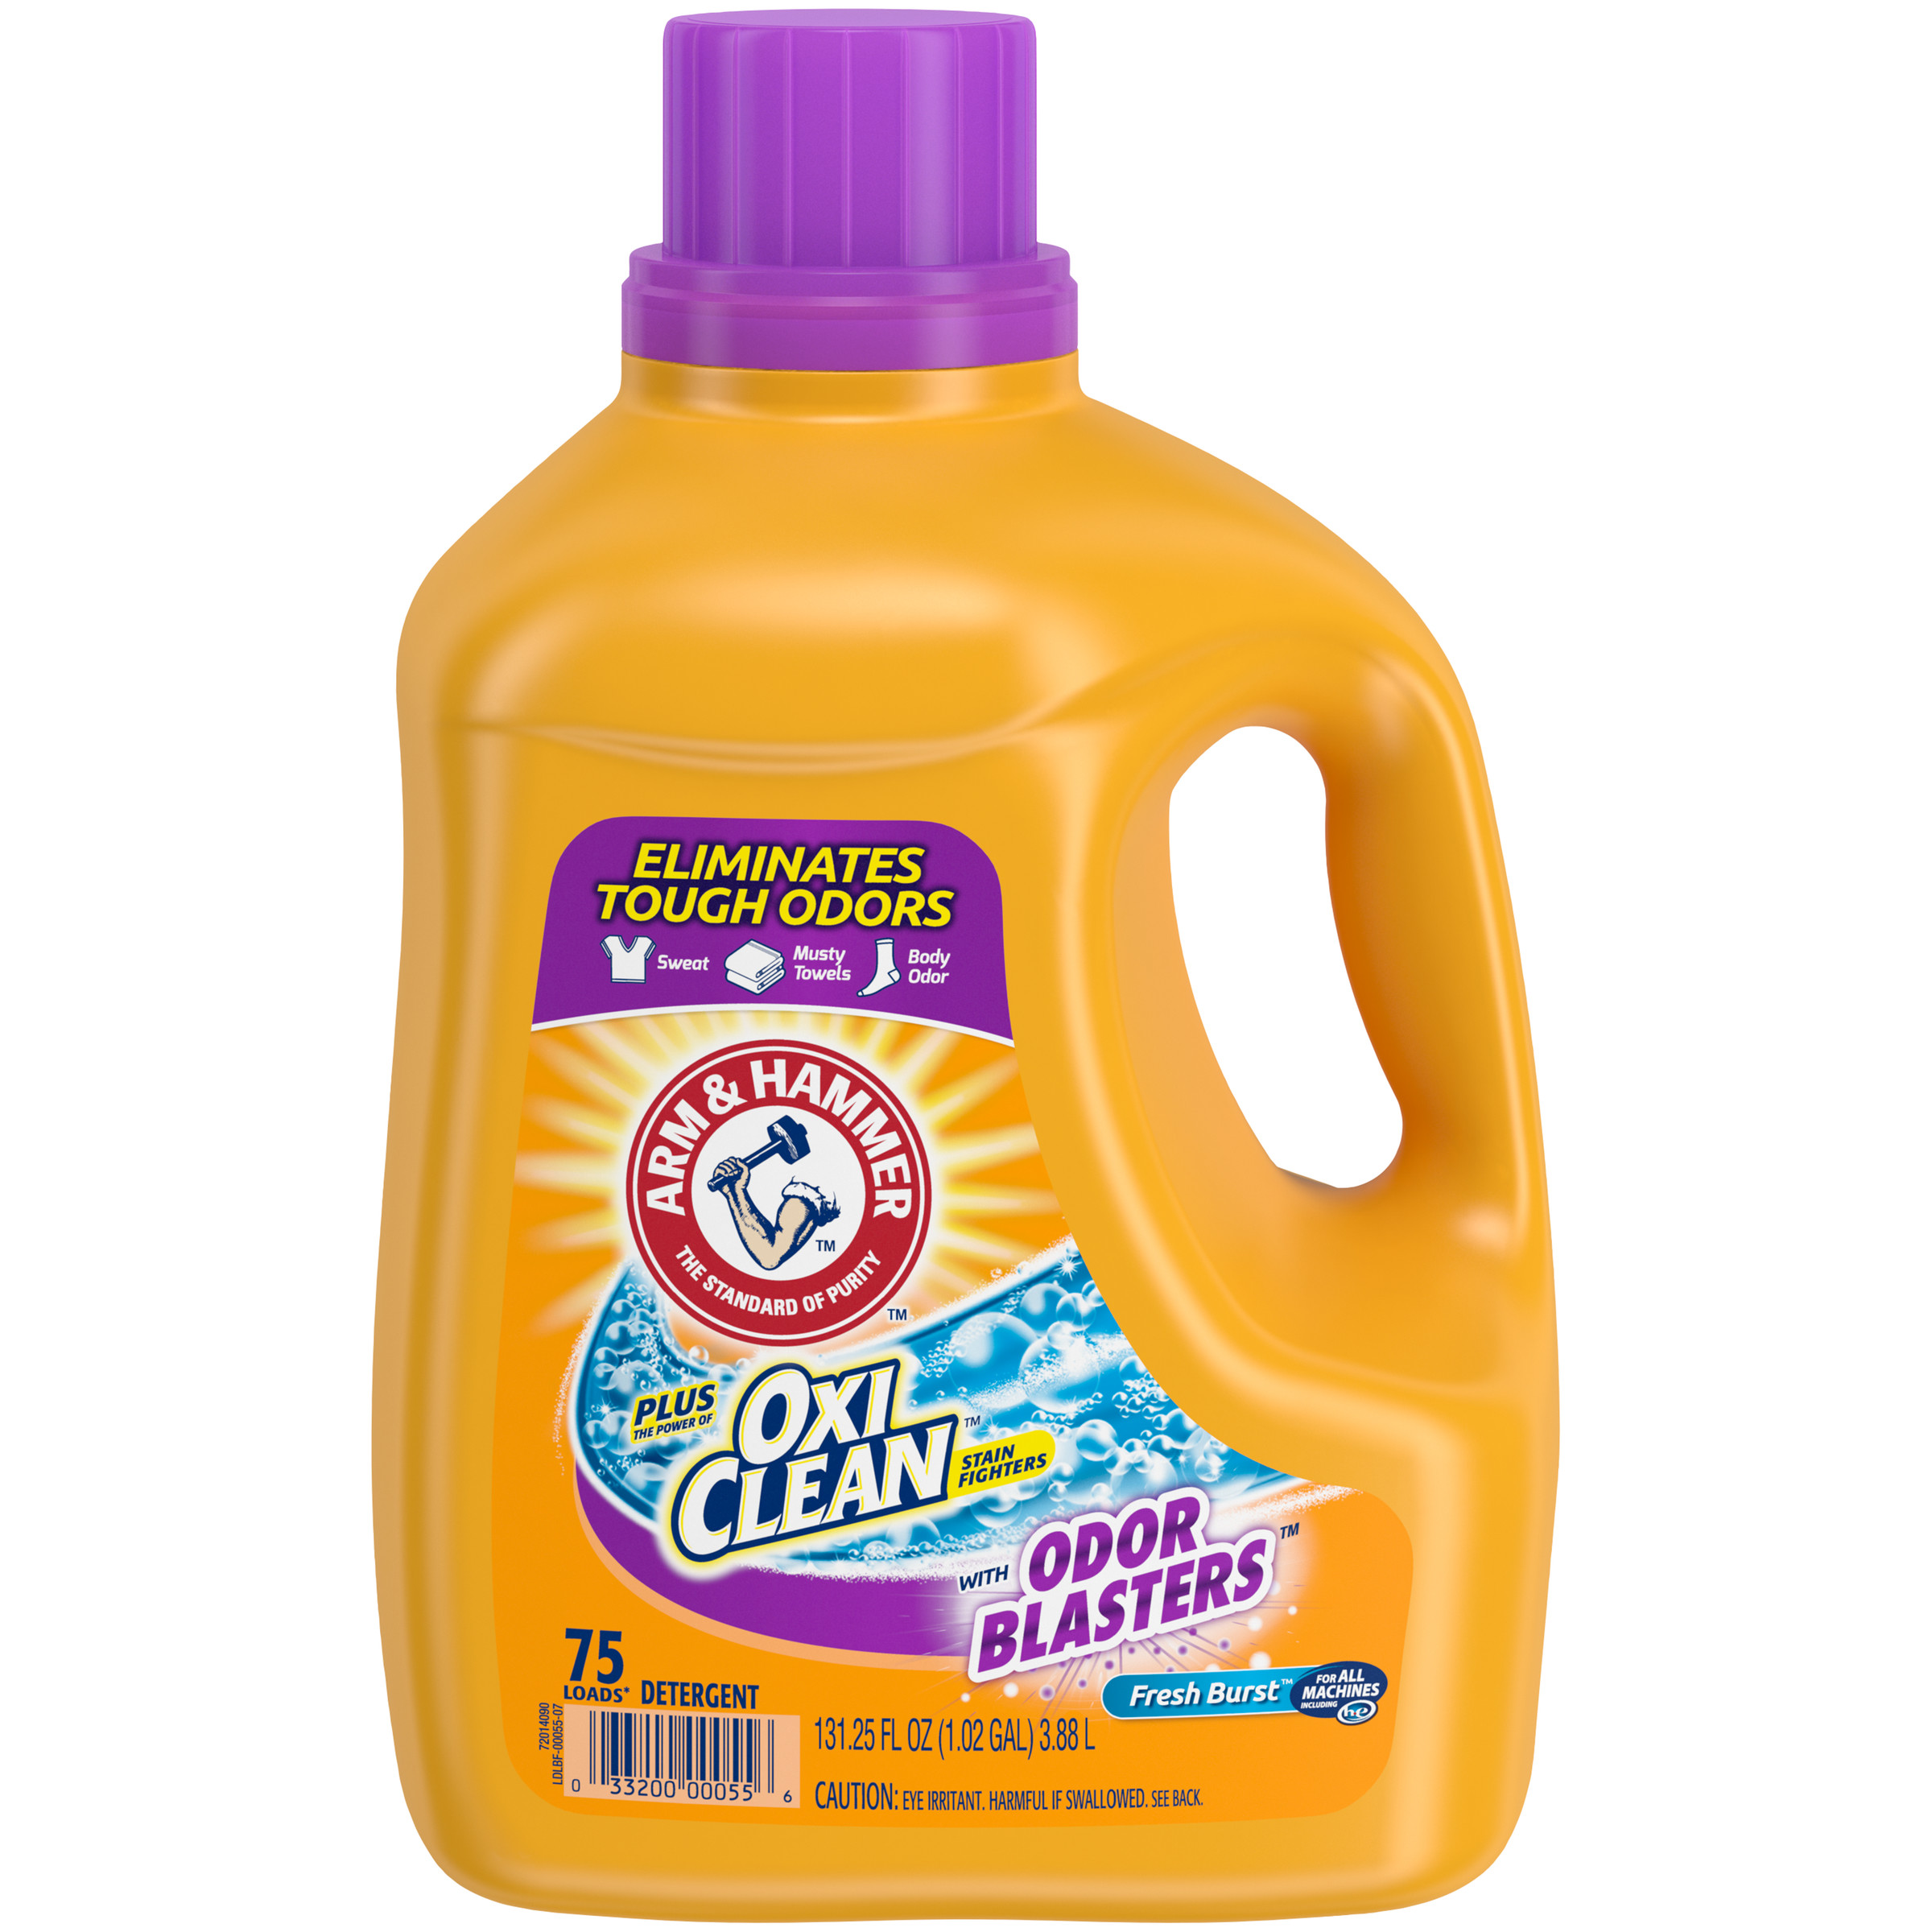 Walmart Arm & Hammer Liquid Laundry Detergent Only 6.22! (0.08/load)